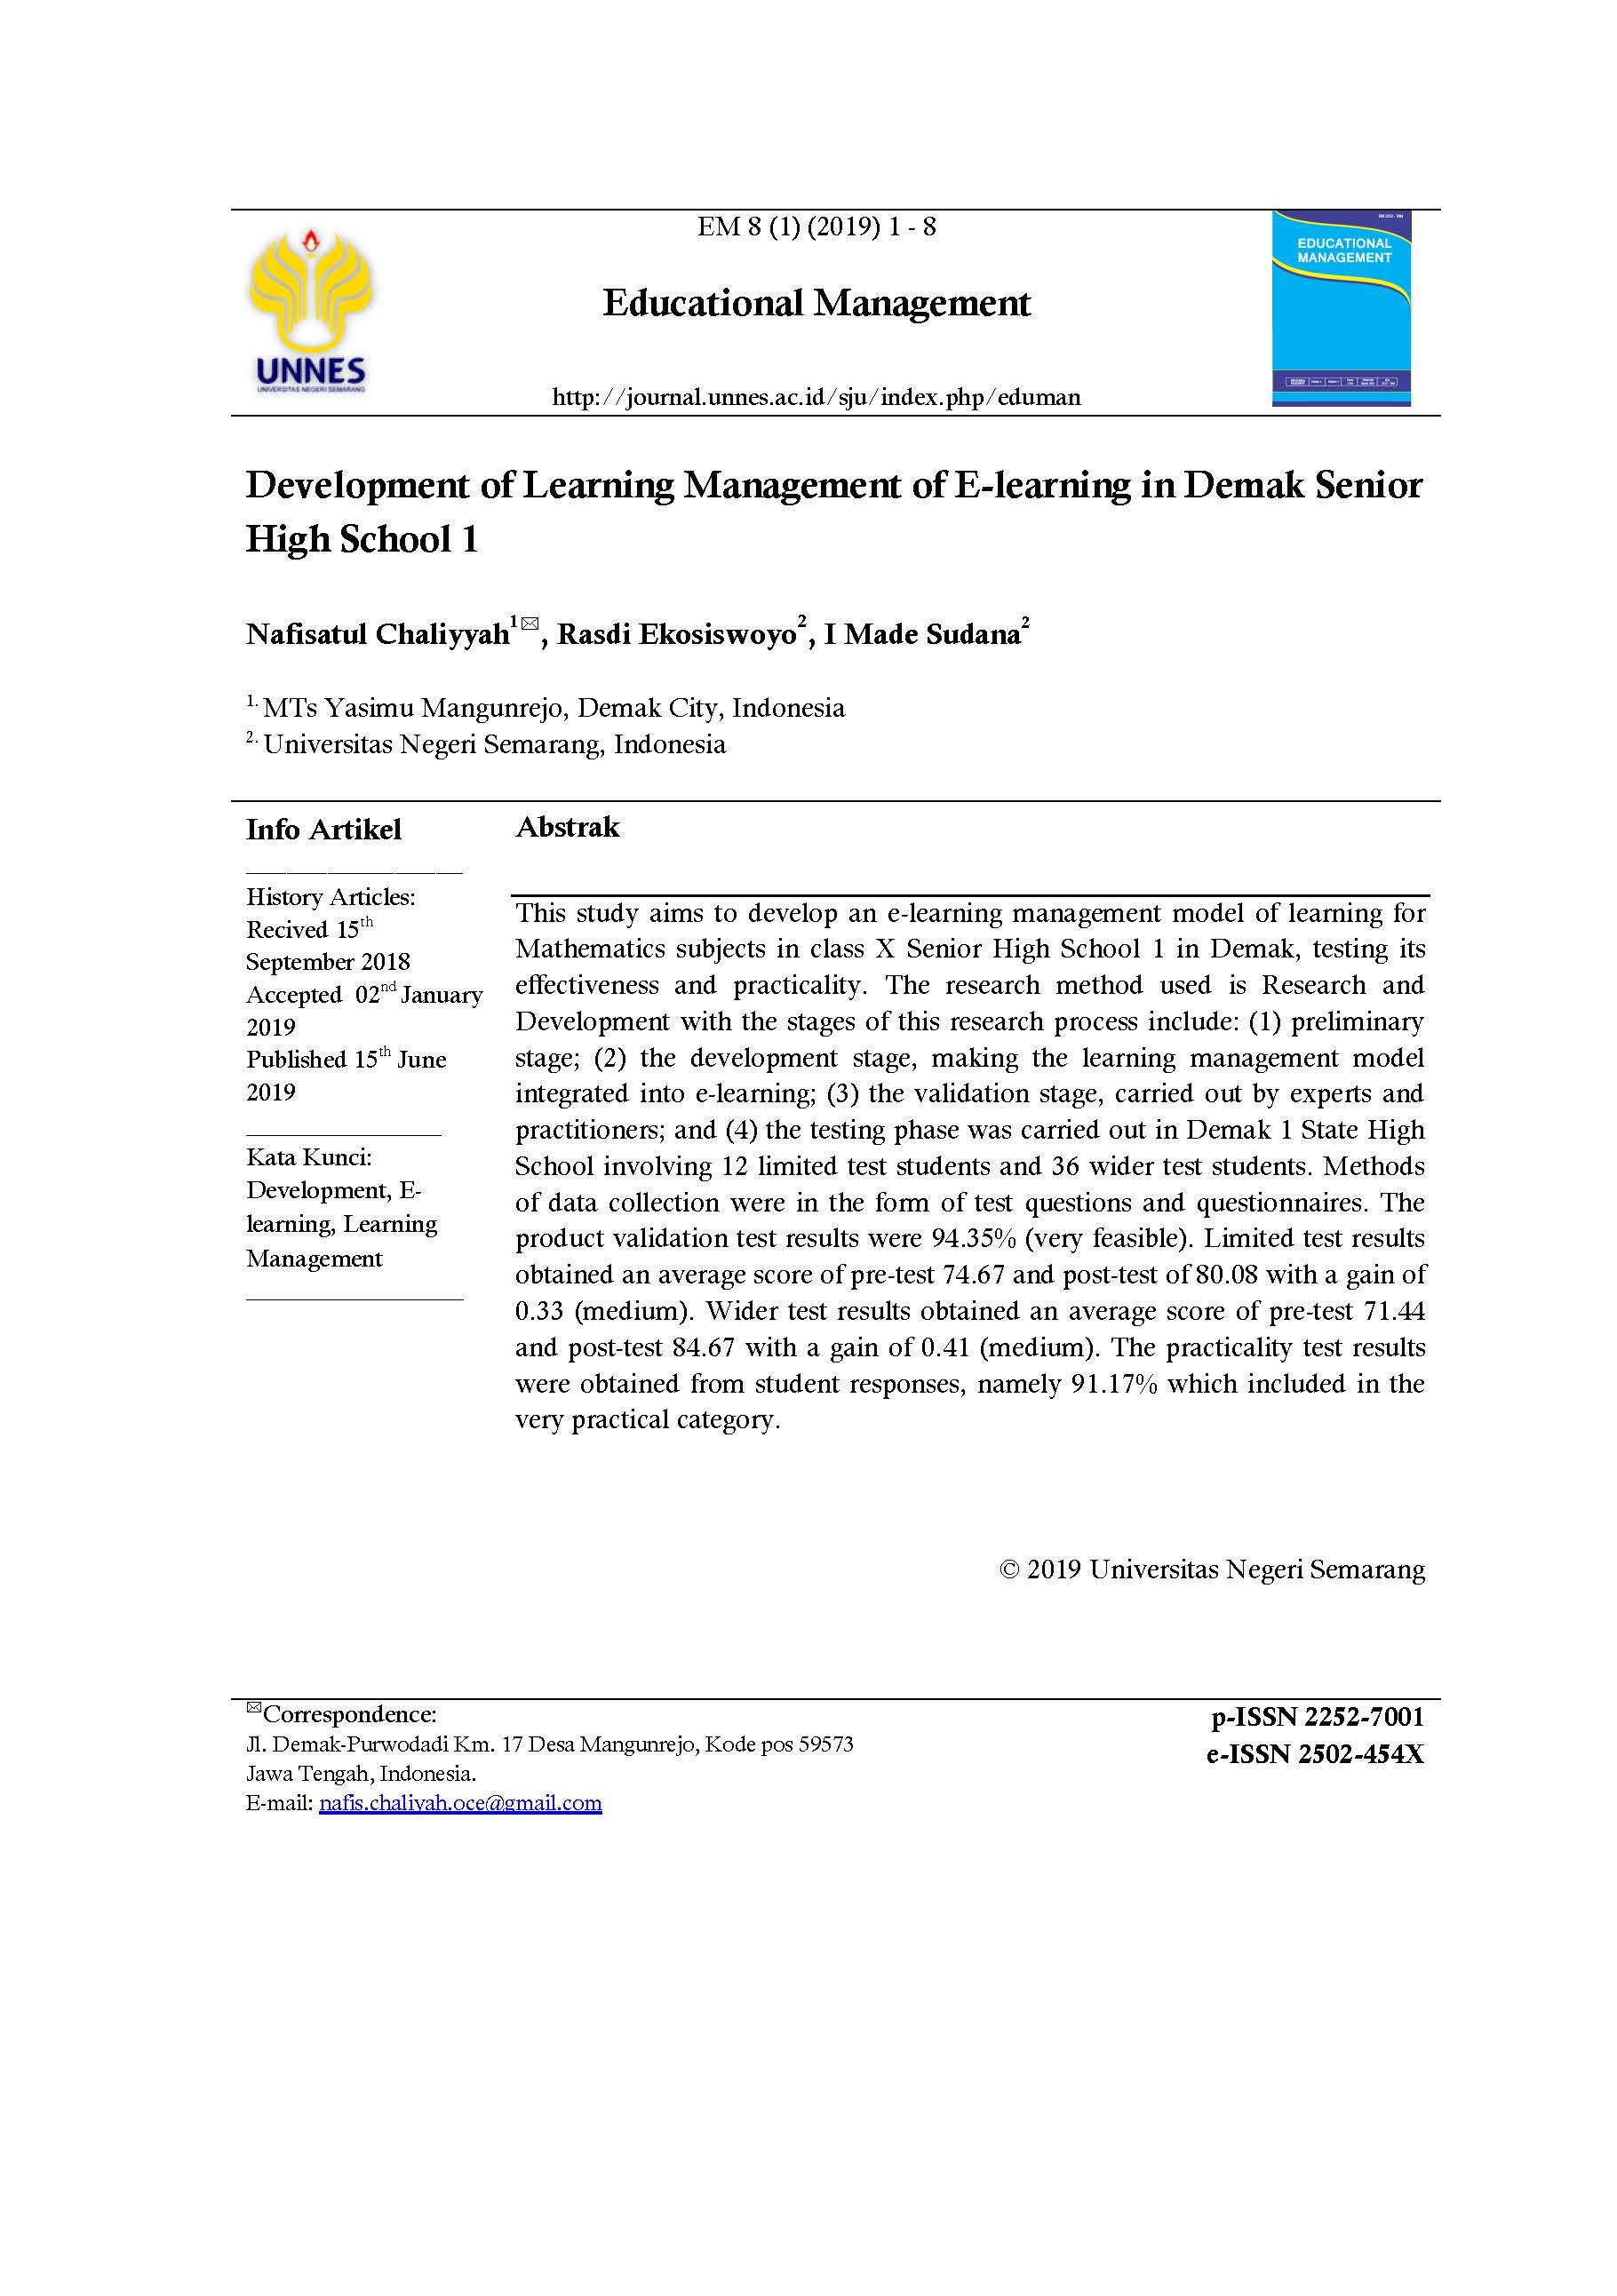 Development of Learning Management of E learning in Demak Senior High School 1